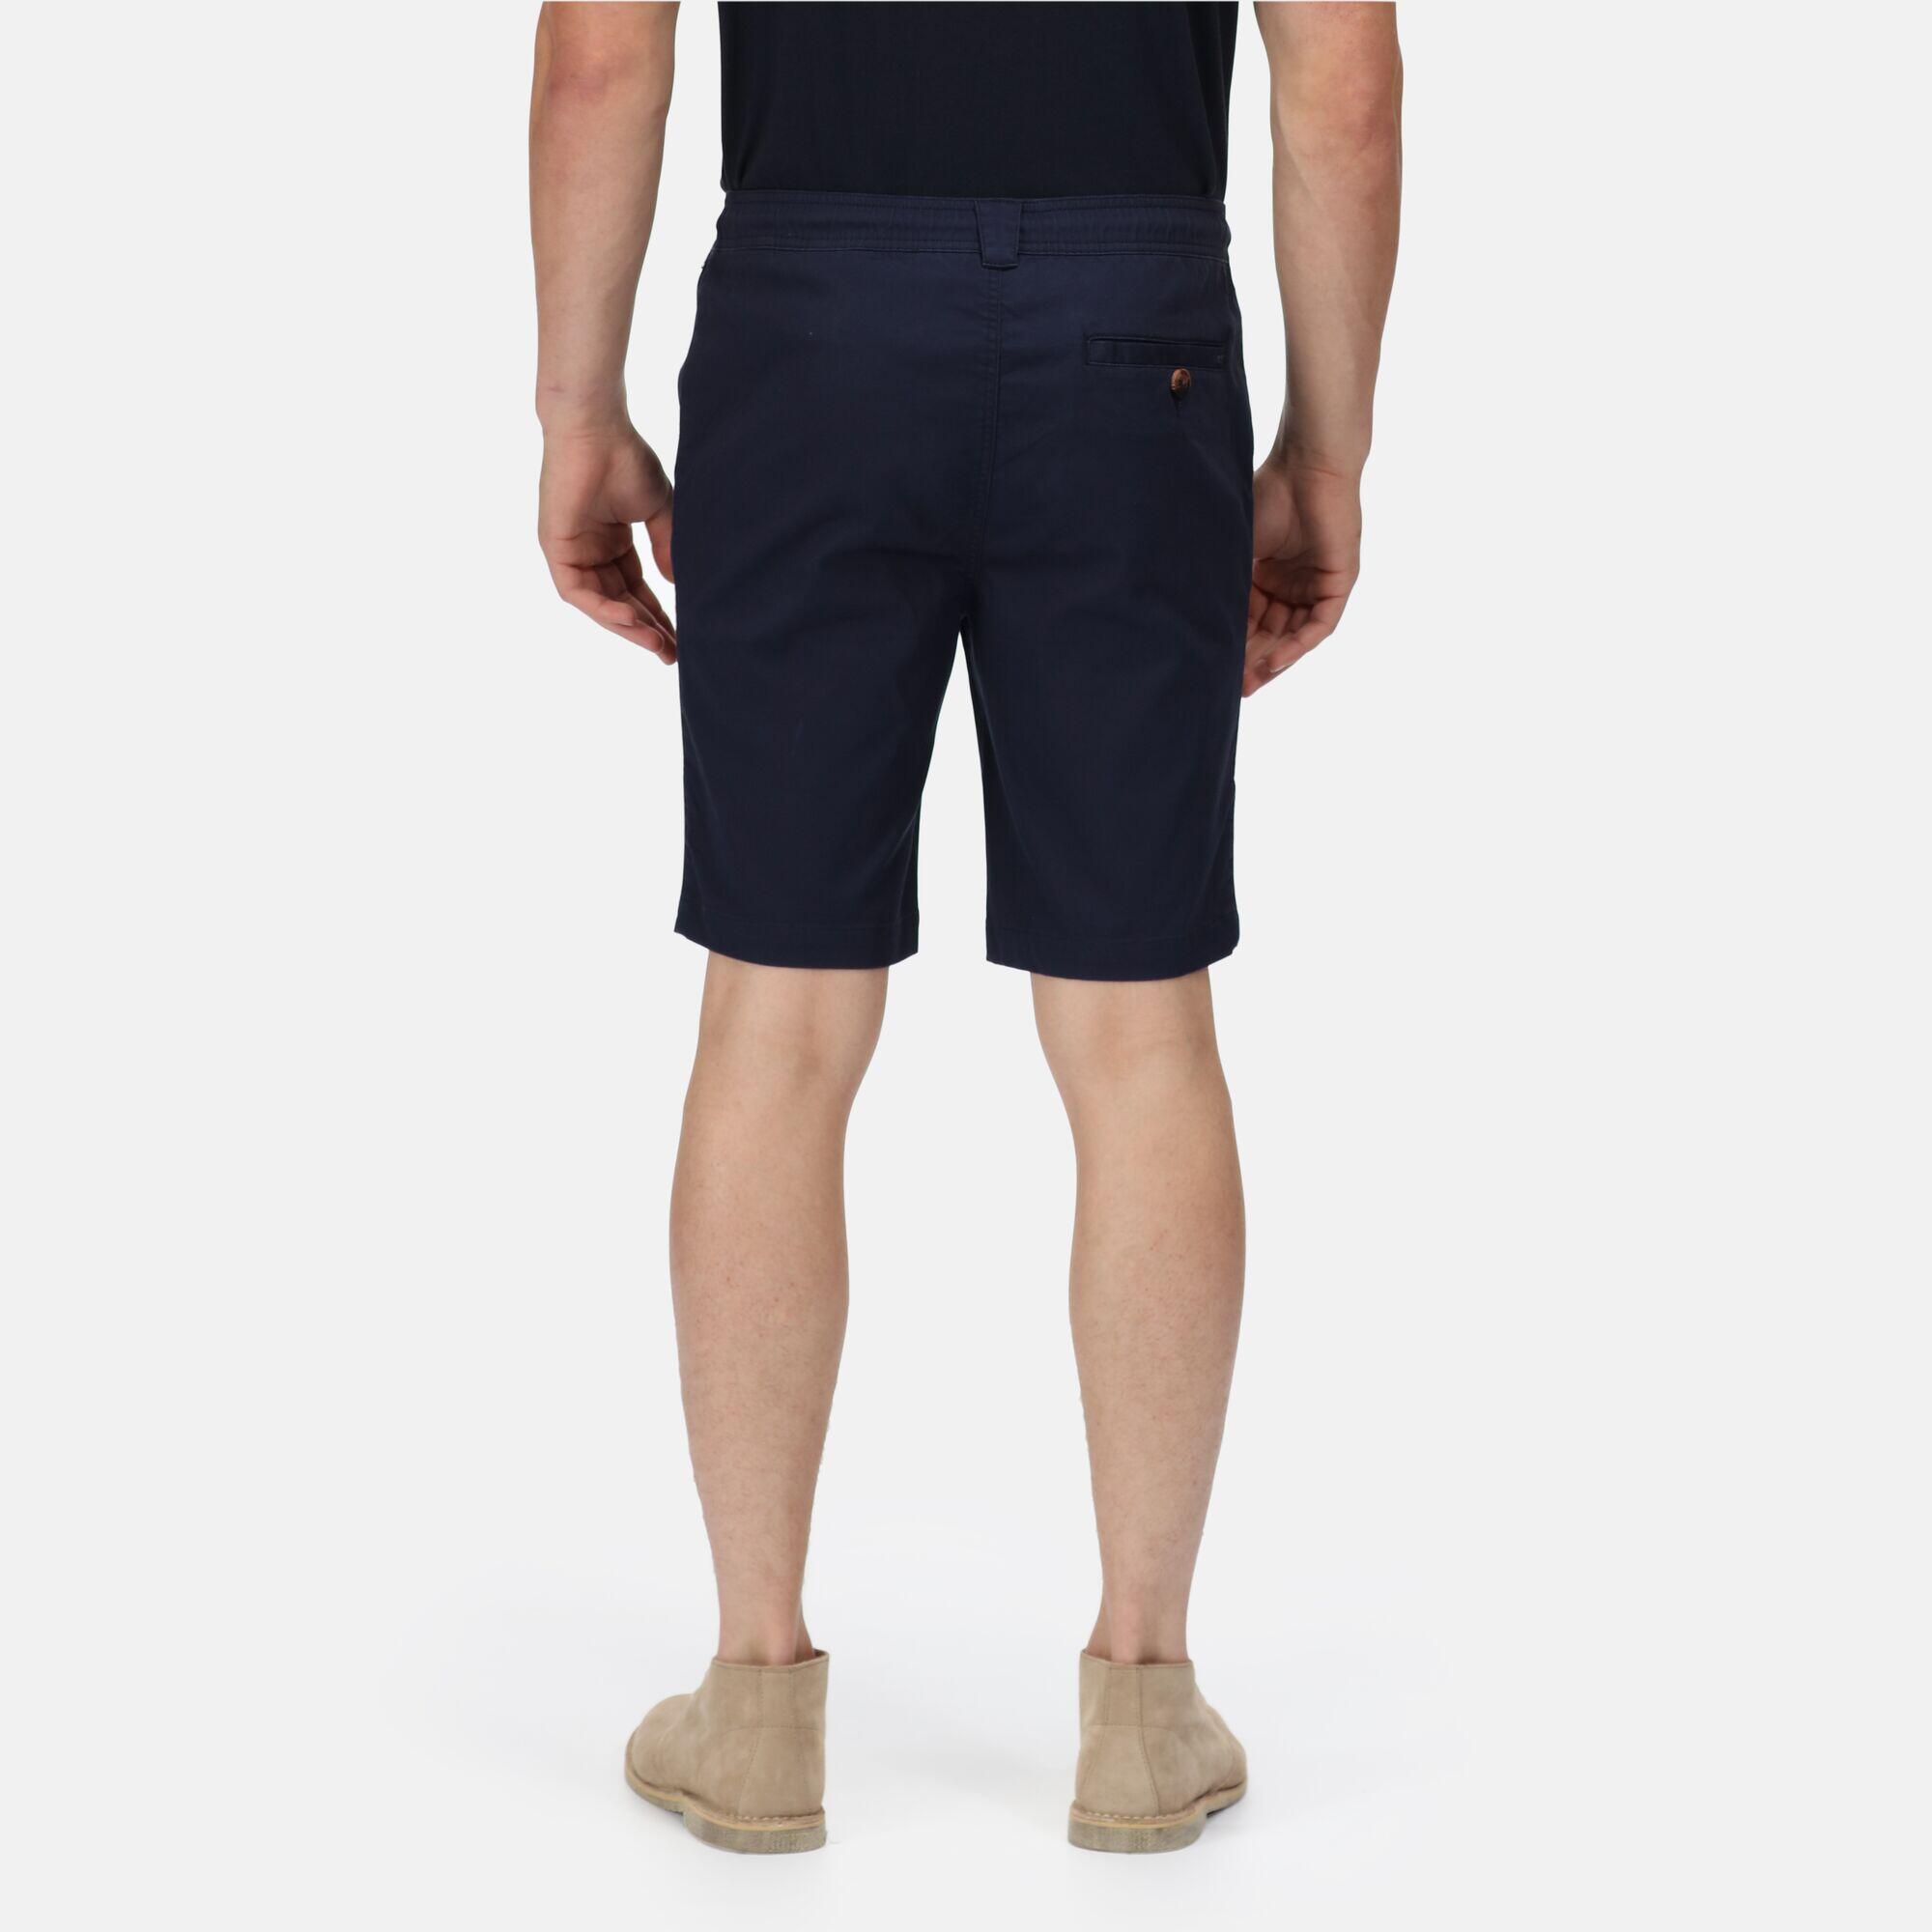 Albie Men's Walking Shorts - Navy 2/5